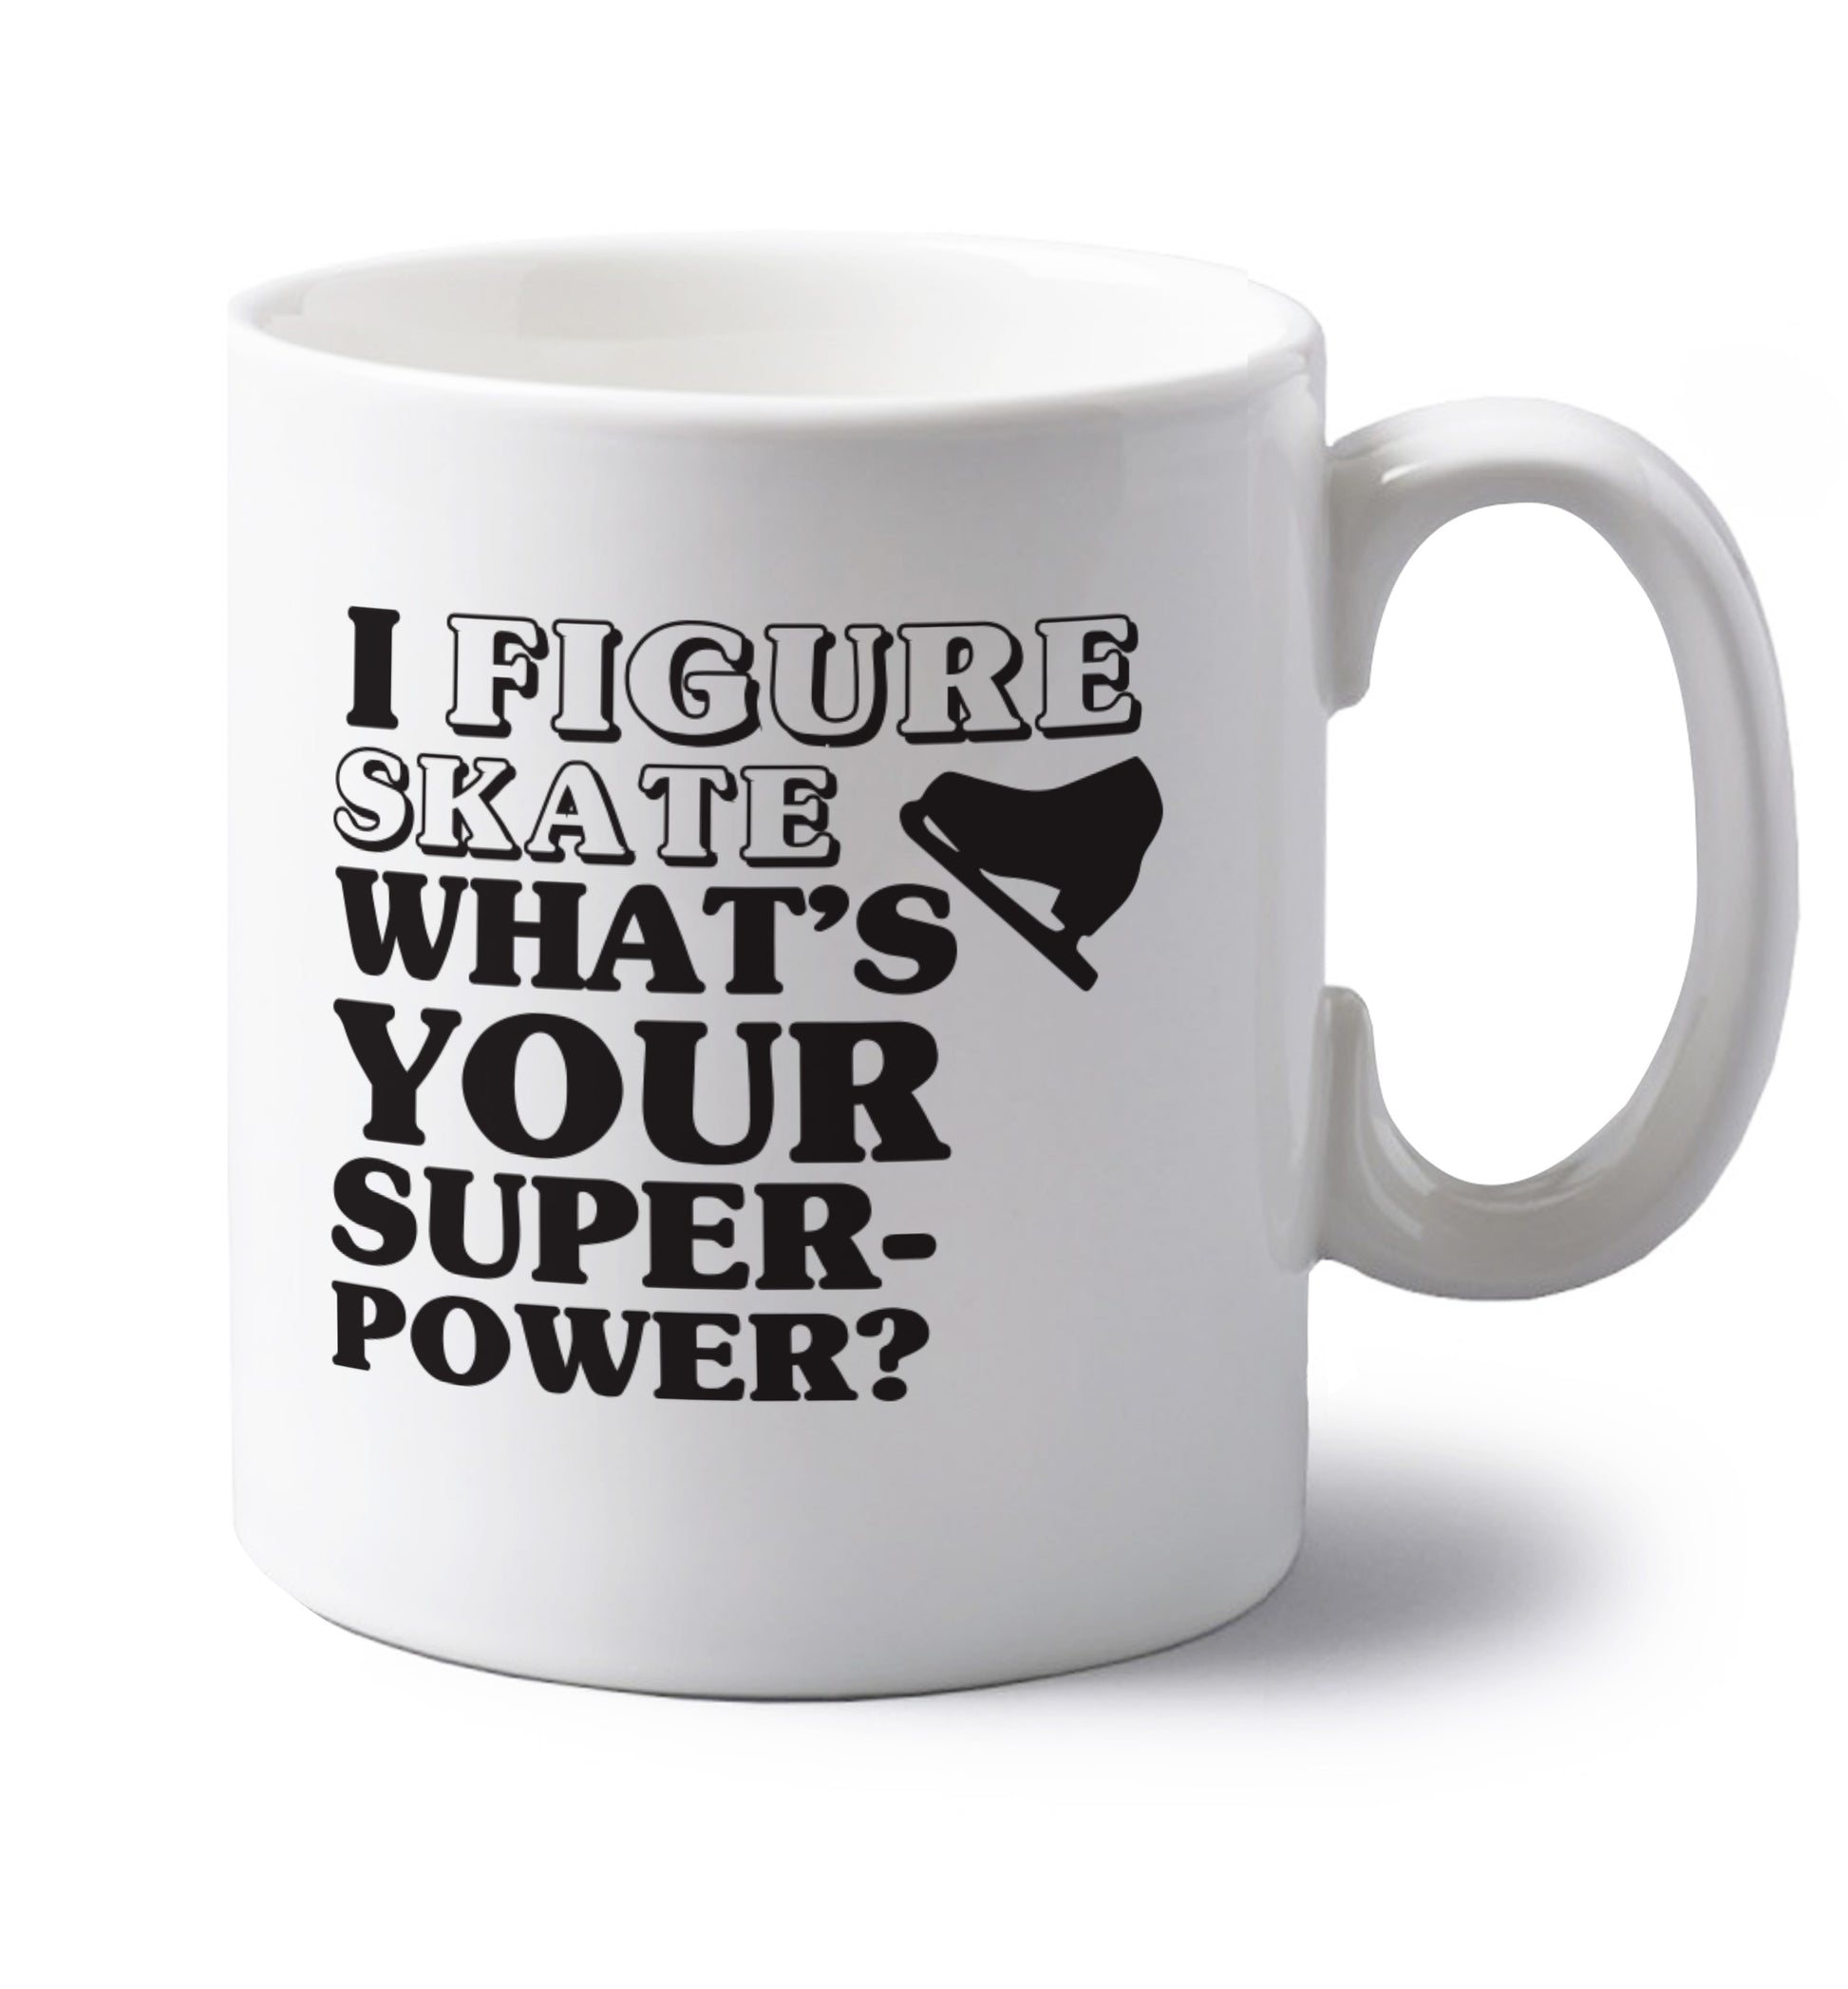 I figure skate what's your superpower? left handed white ceramic mug 